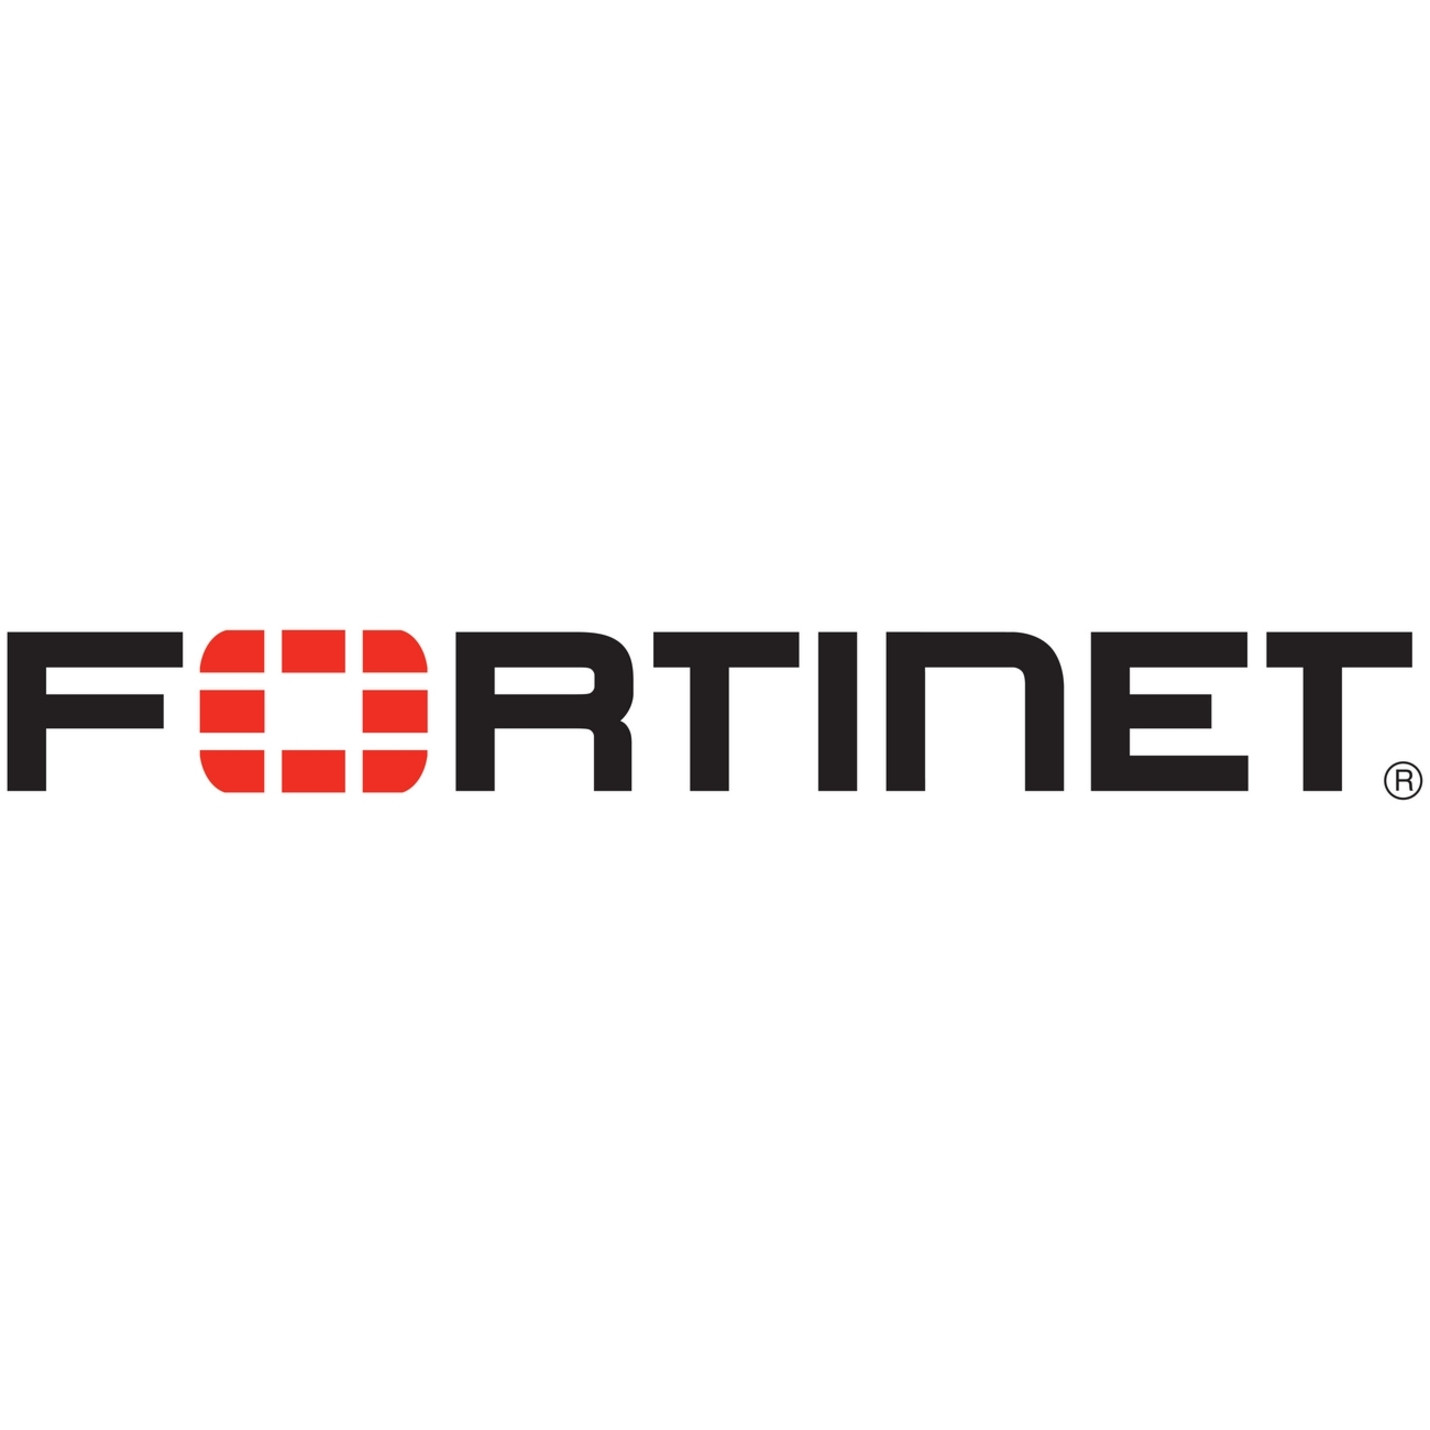 Fortinet Enterprise Bundle (FortiCare plus NGFW, AV, Web Filtering, Antispam, Botnet IP/Domain, FortiSandbox Cloud and Mobile Secu… FC-10-00143-871-0…